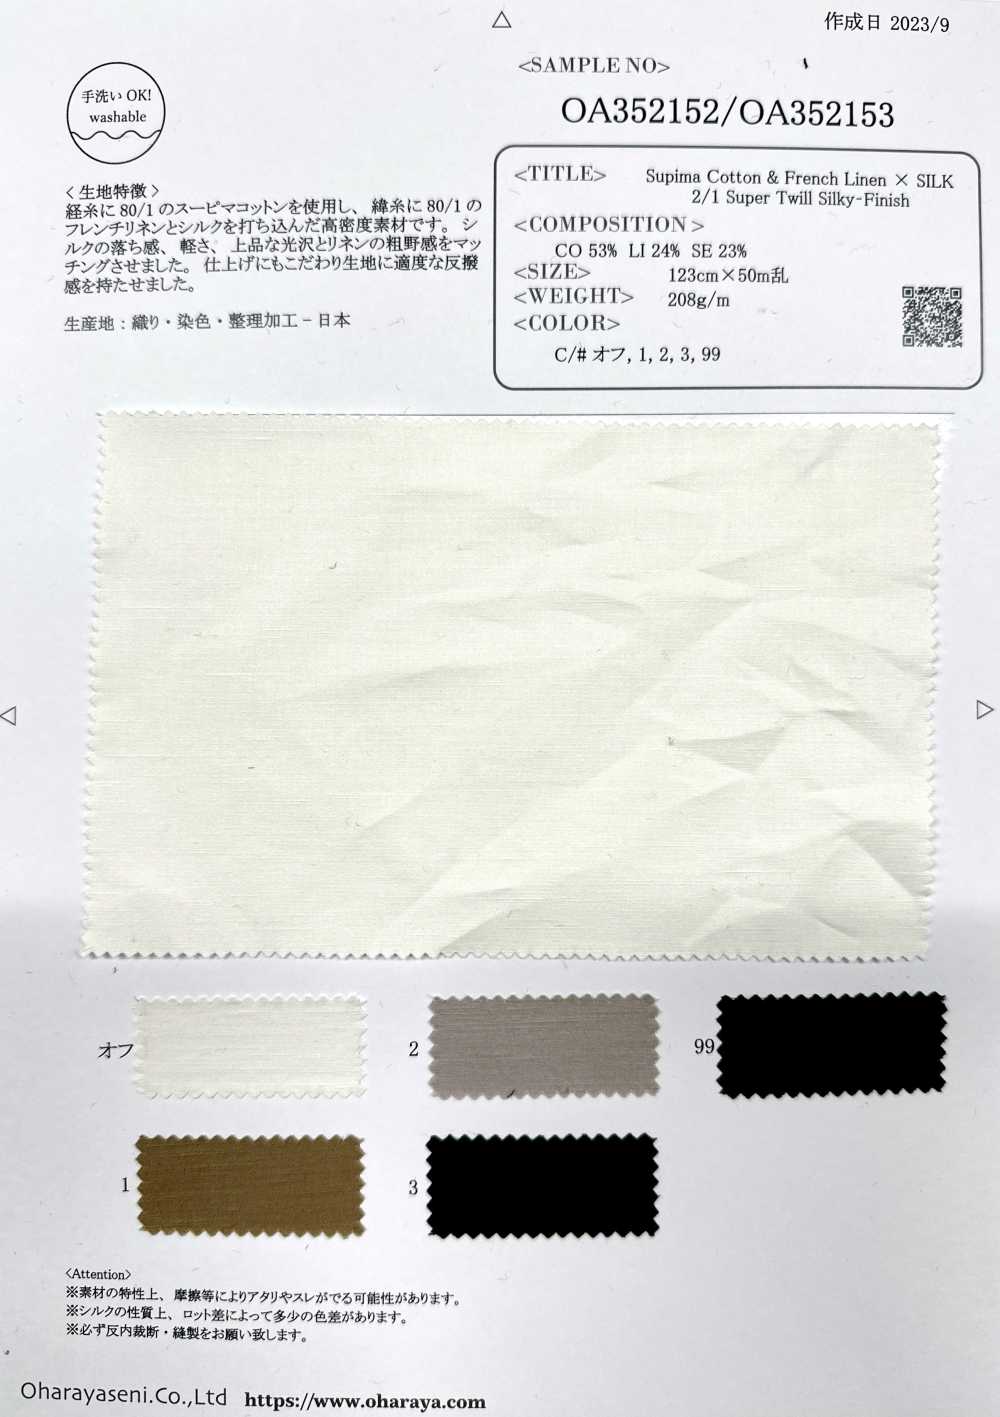 OA352152 Coton Supima & Lin Français × SOIE 2/1 Super Twill Finition Soyeuse[Fabrication De Textile] Oharayaseni